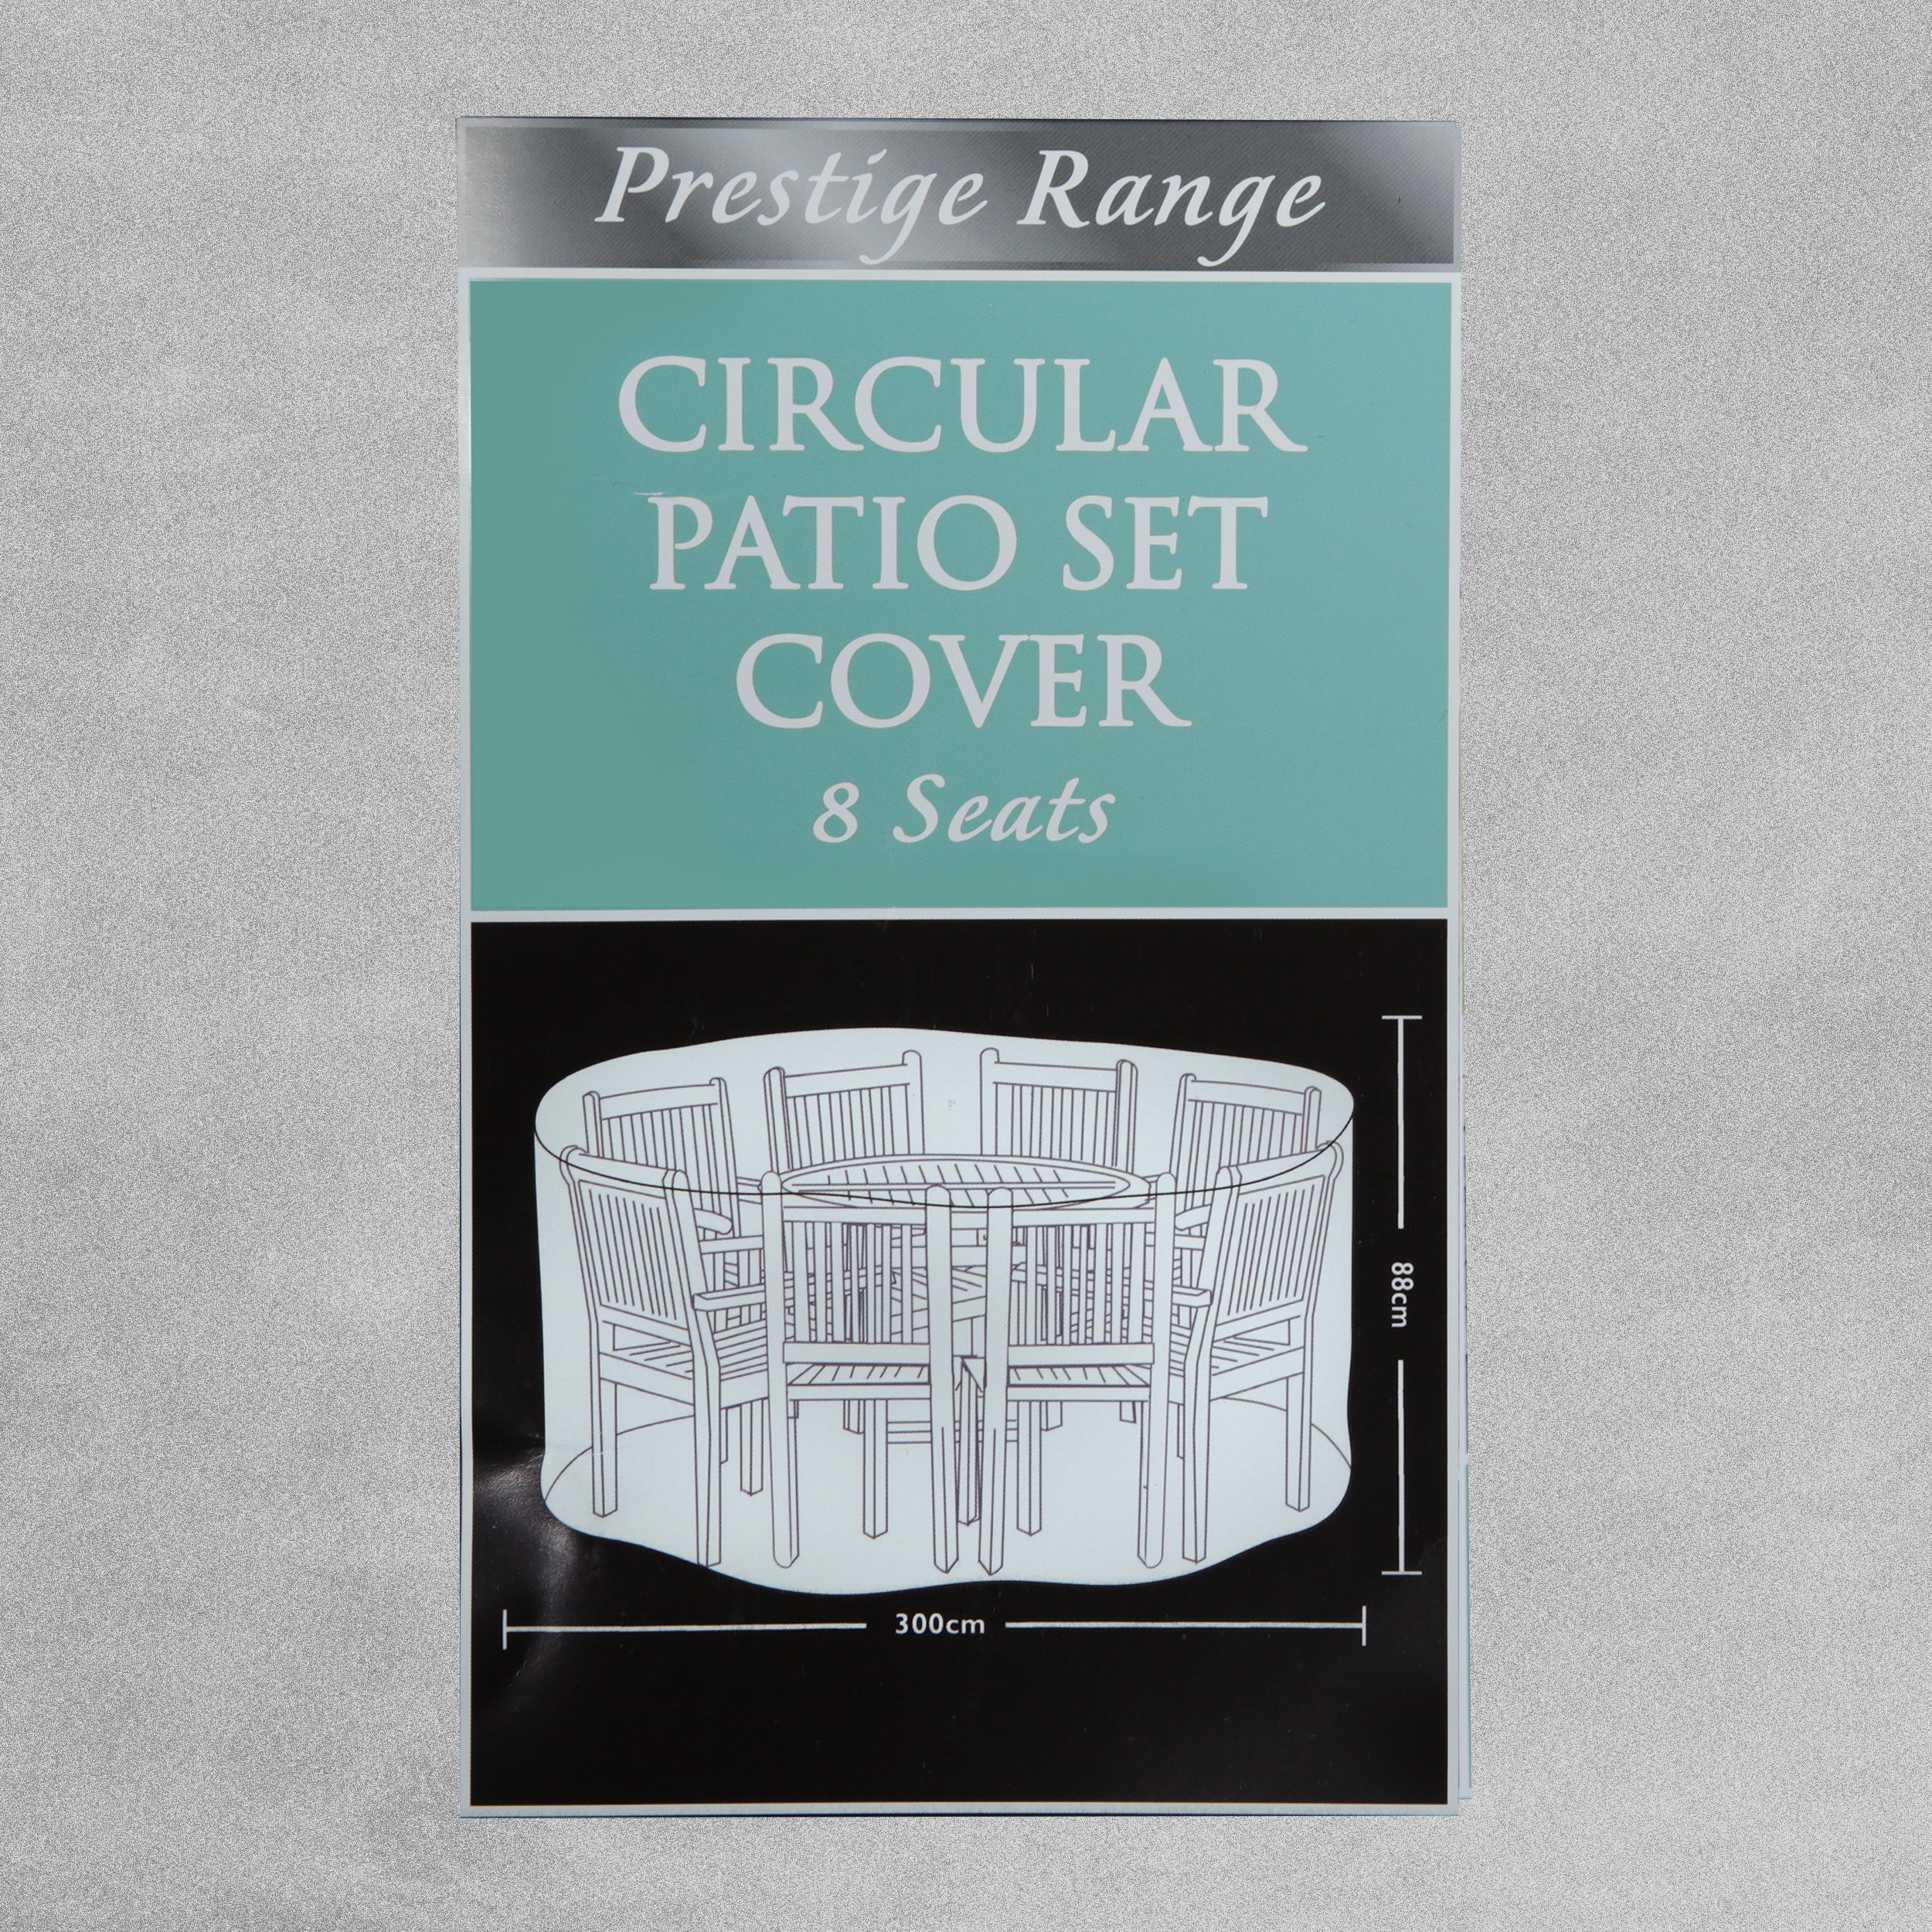 Tom Chambers Prestige Range Garden Covers - Circular Patio Set Cover 8 Seats - Green